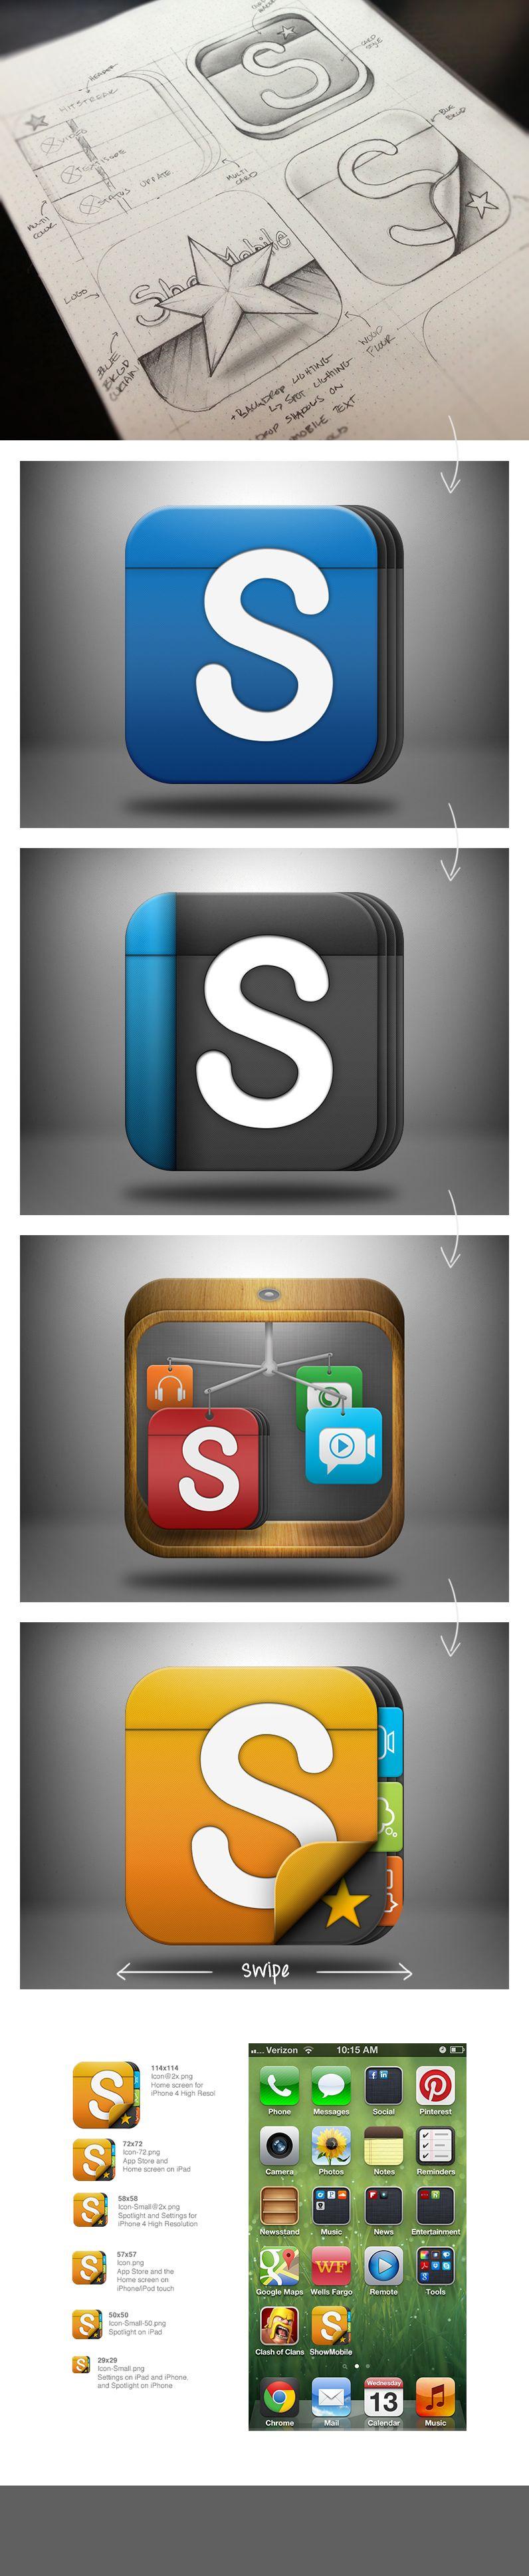 Google Slides App Logo - Pin by Justin Graham on Web Design Inspiration | UI | UX | App icon ...